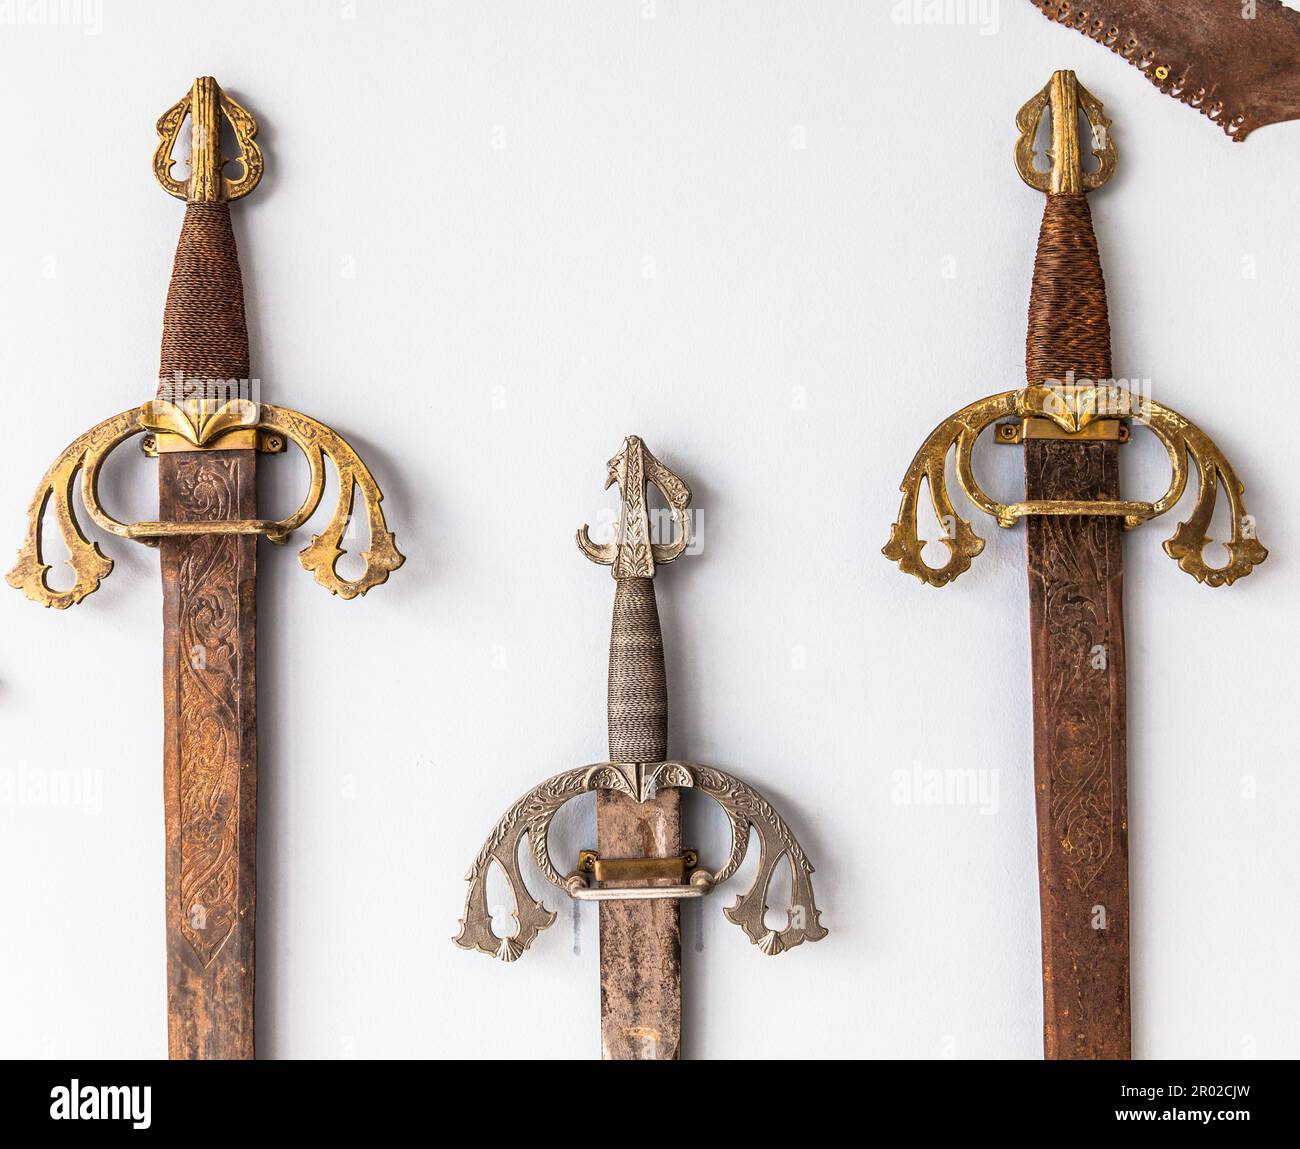 Detailview  Swords & more